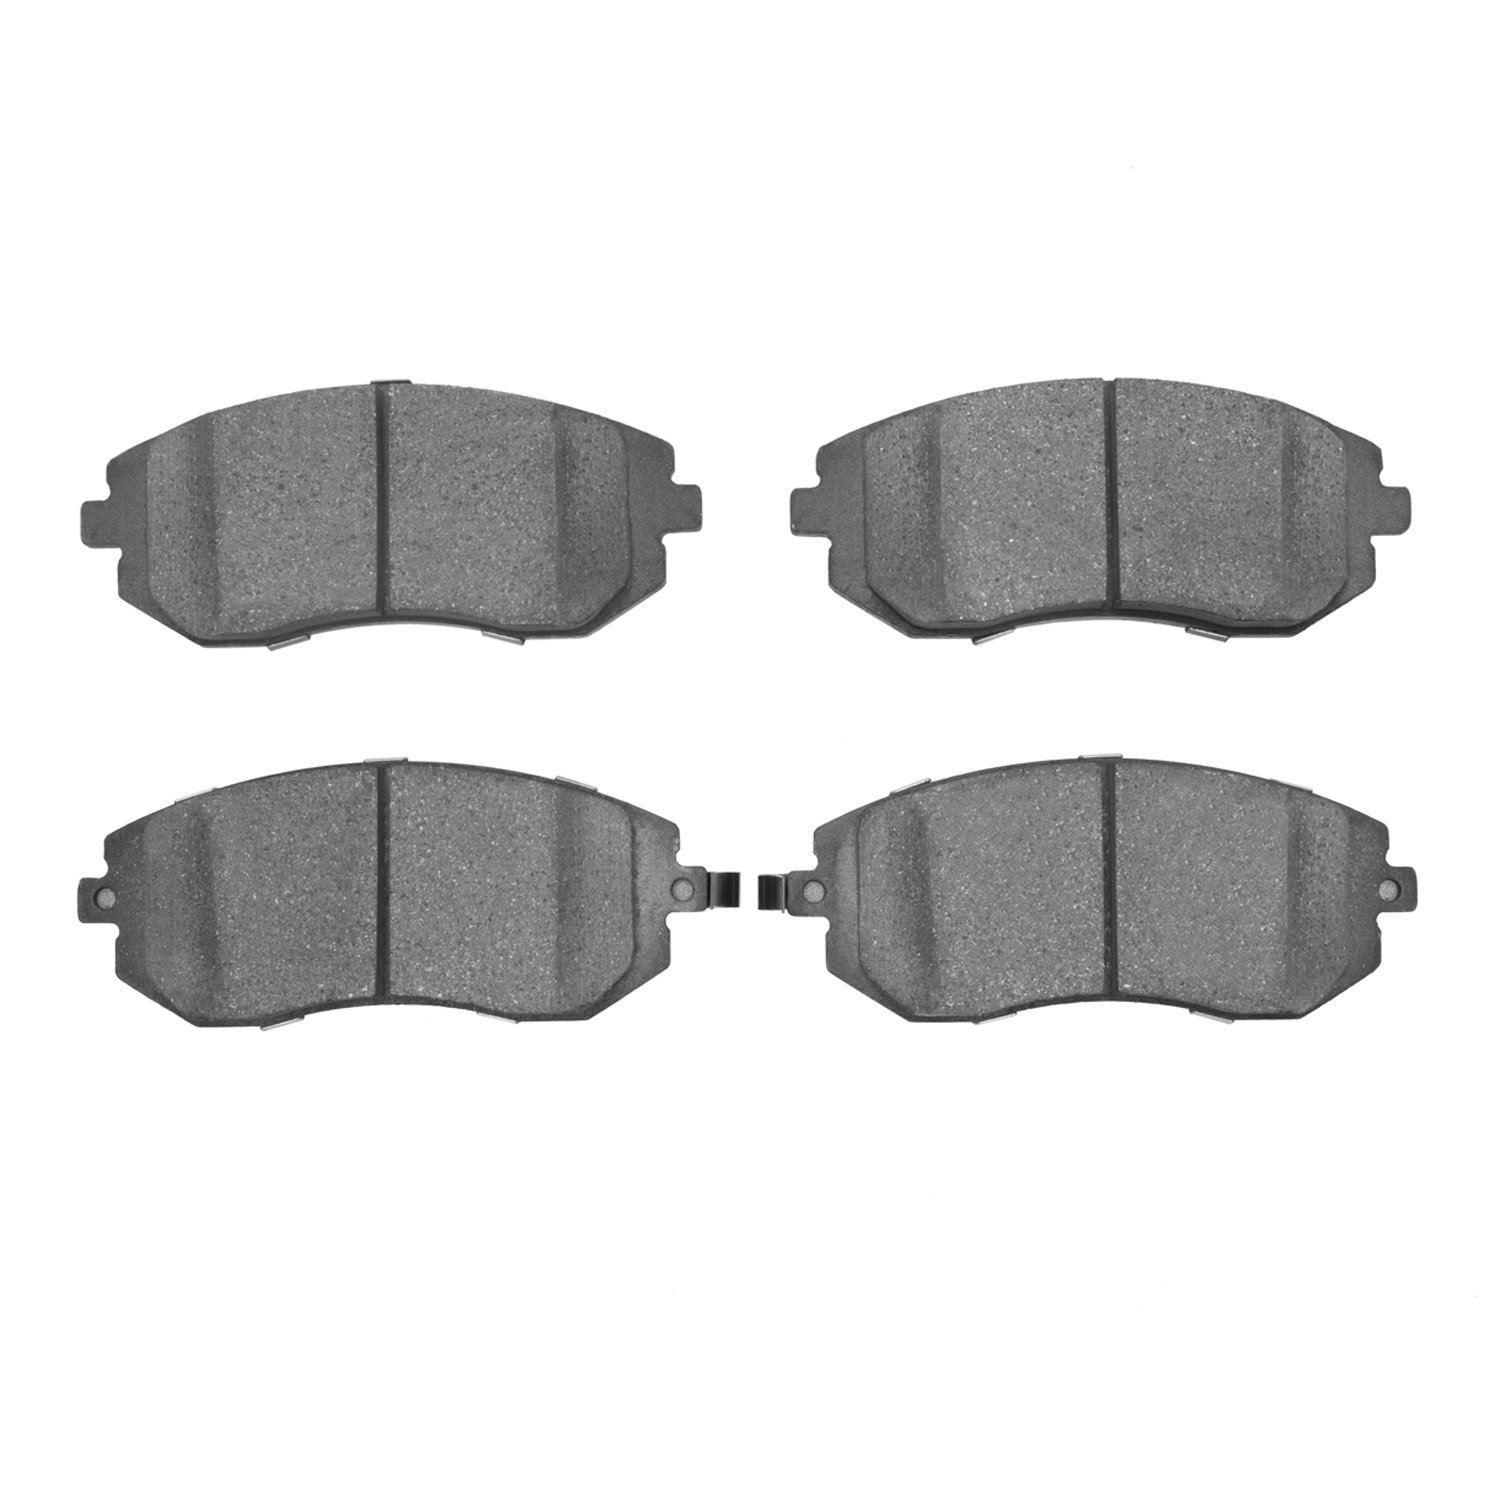 Euro Ceramic Brake Pads, 2002-2012 Fits Multiple Makes/Models, Position: Front